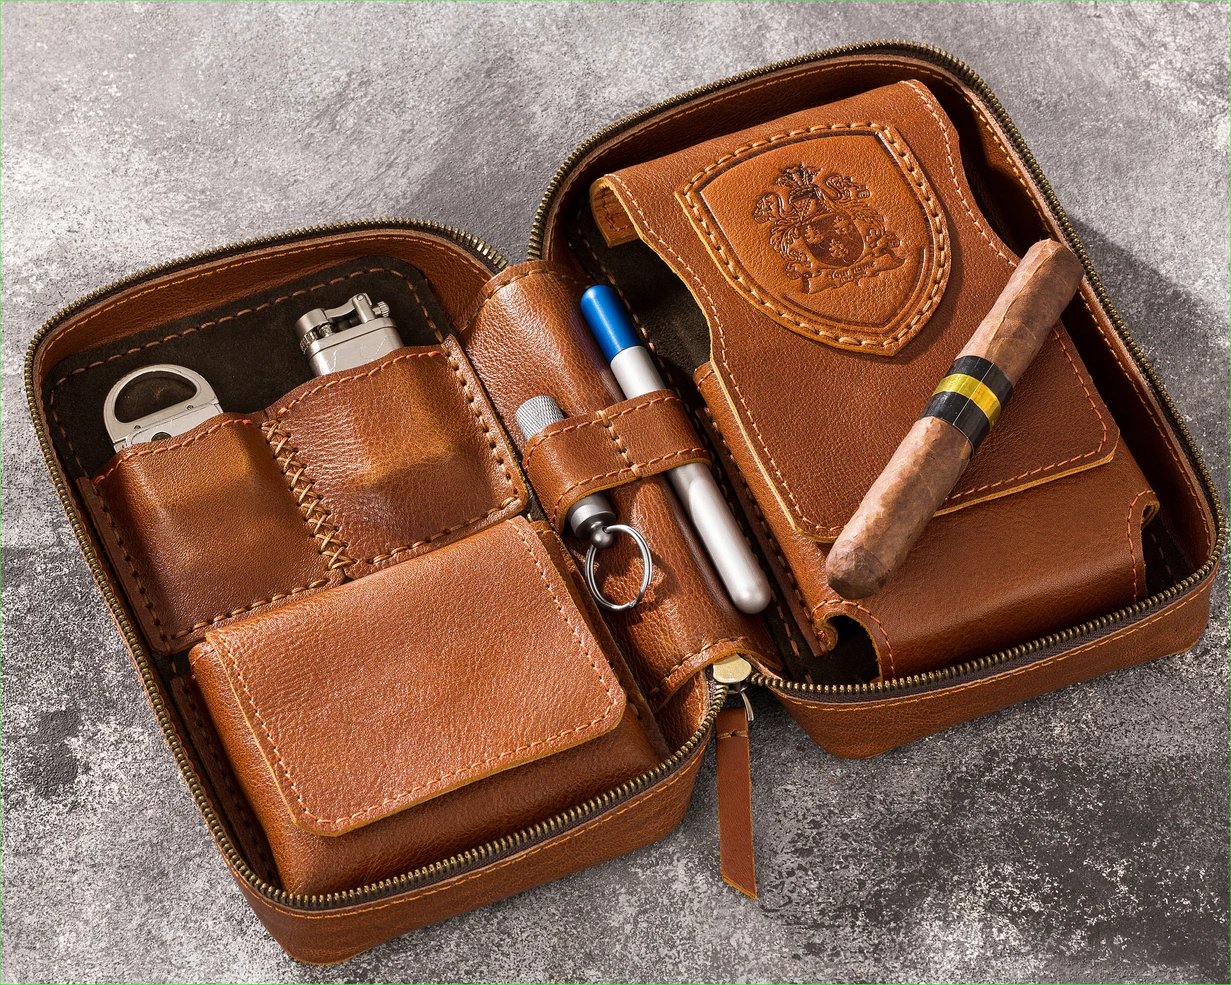 Henry's Cigar case.jpg